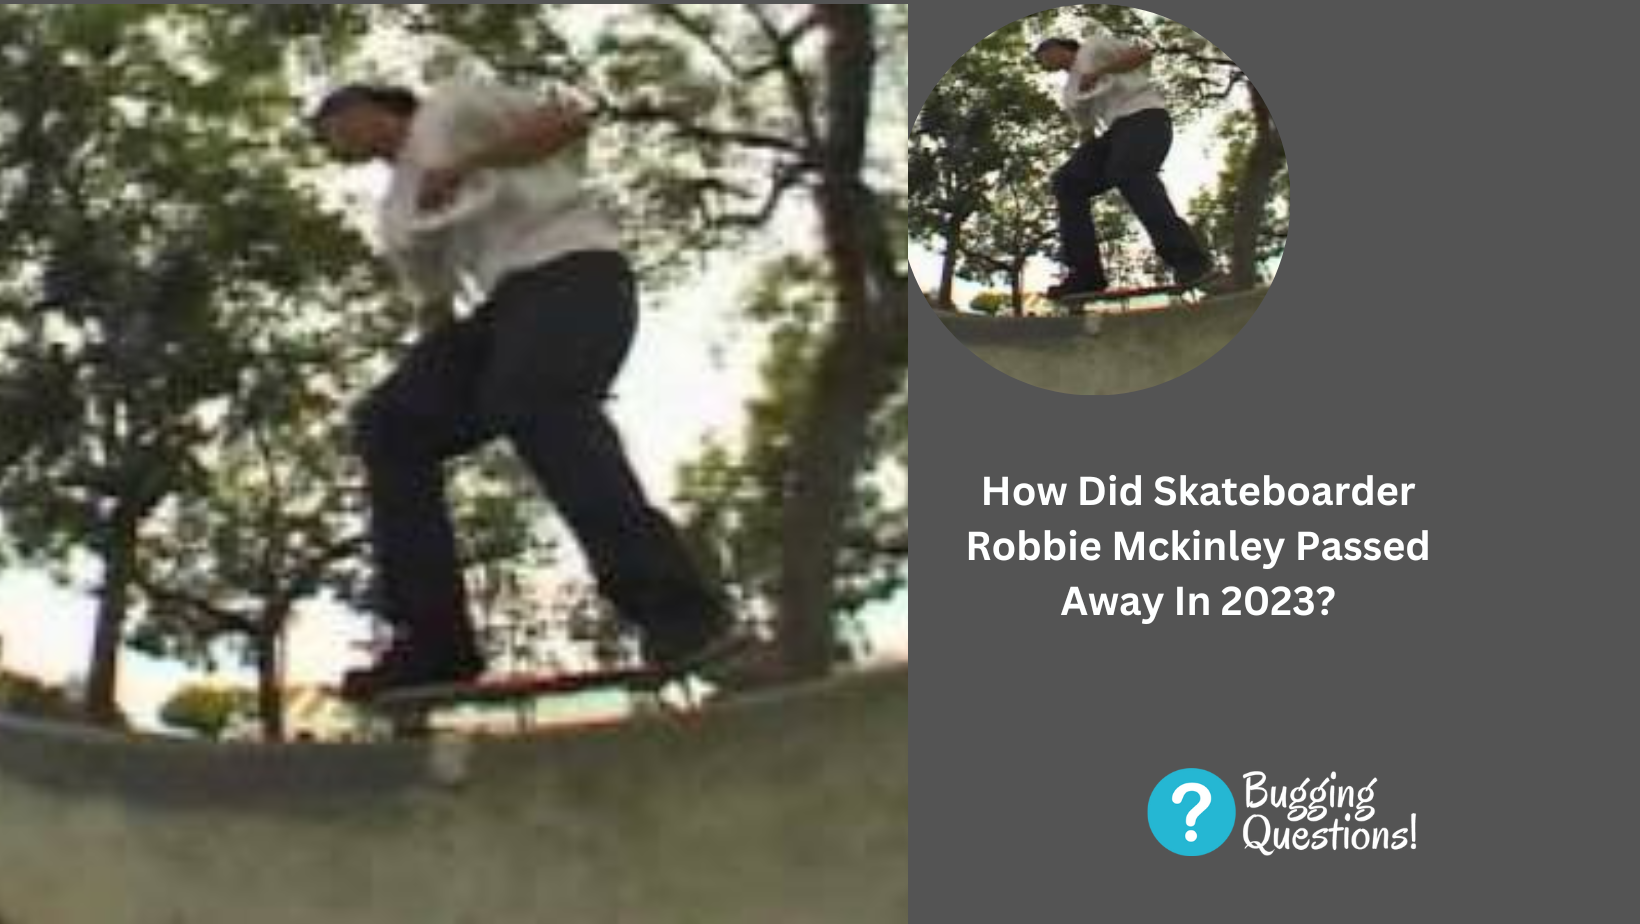 How Did Skateboarder Robbie Mckinley Passed Away In 2023?